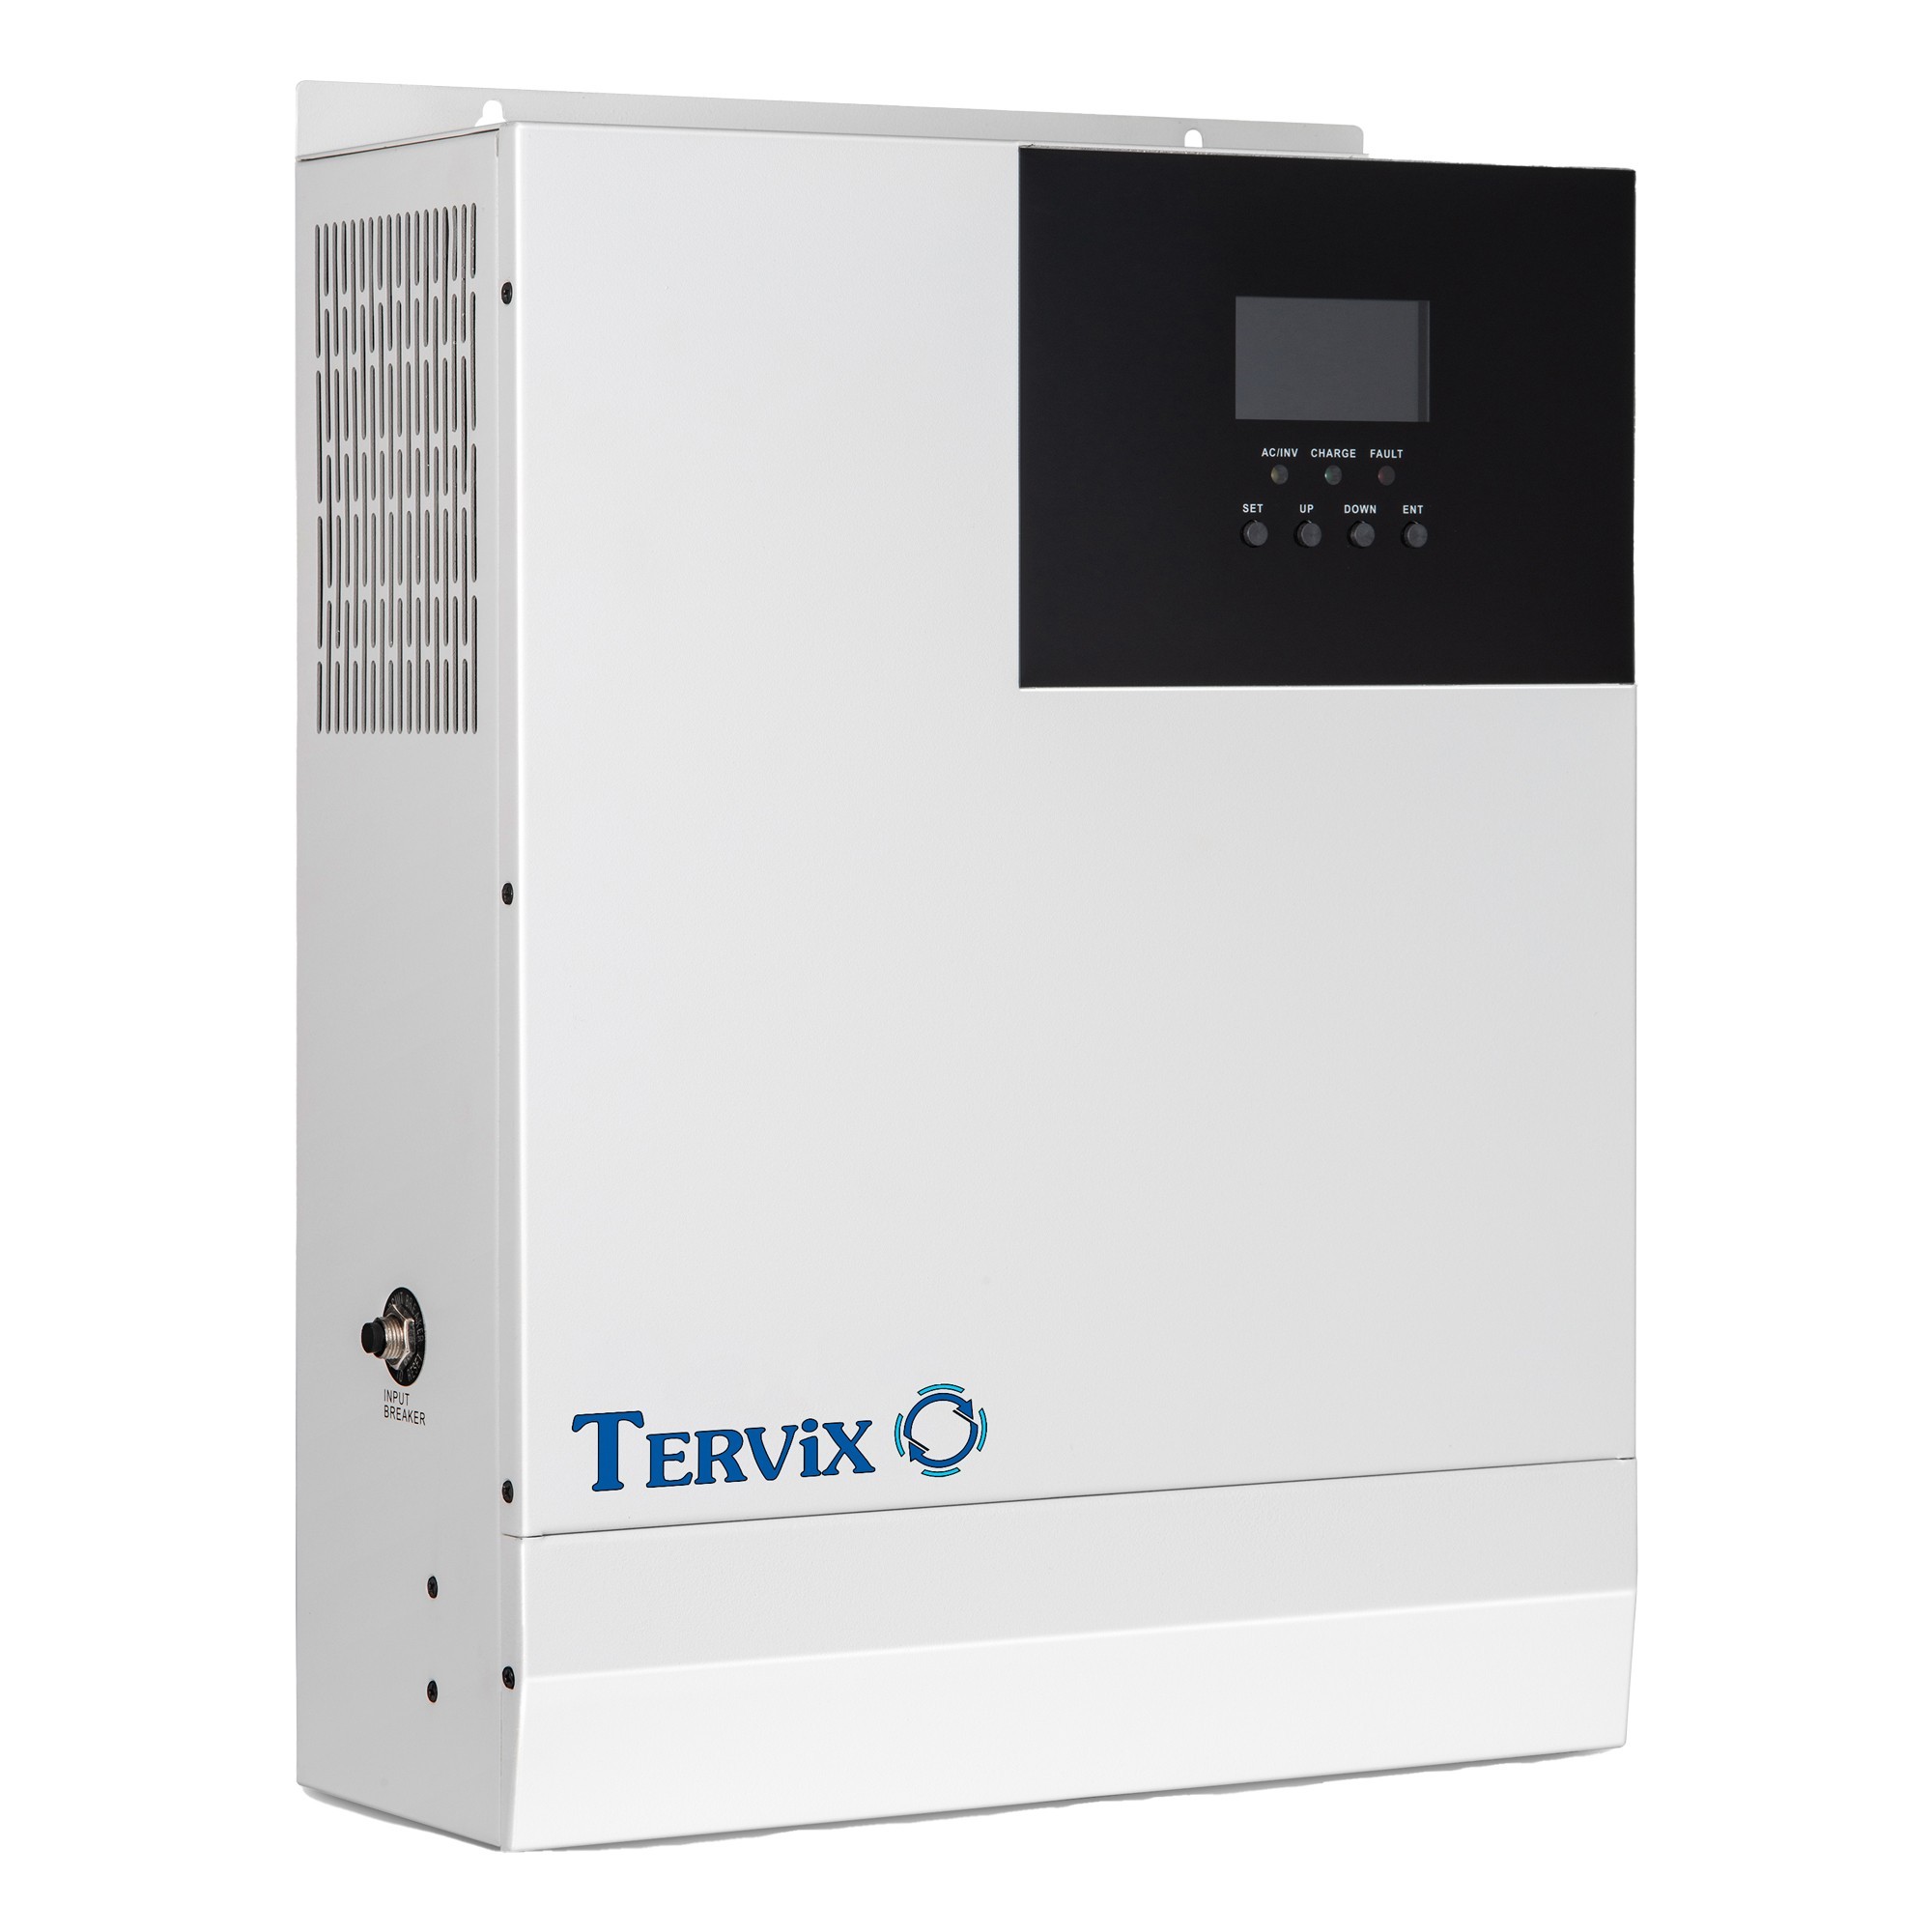 Система автономного питания Tervix BANKA 10,2 кВтч - инвертор 5кВт + аккумулятор 51,2В 200 Ач 693522 цена 219300.00 грн - фотография 2